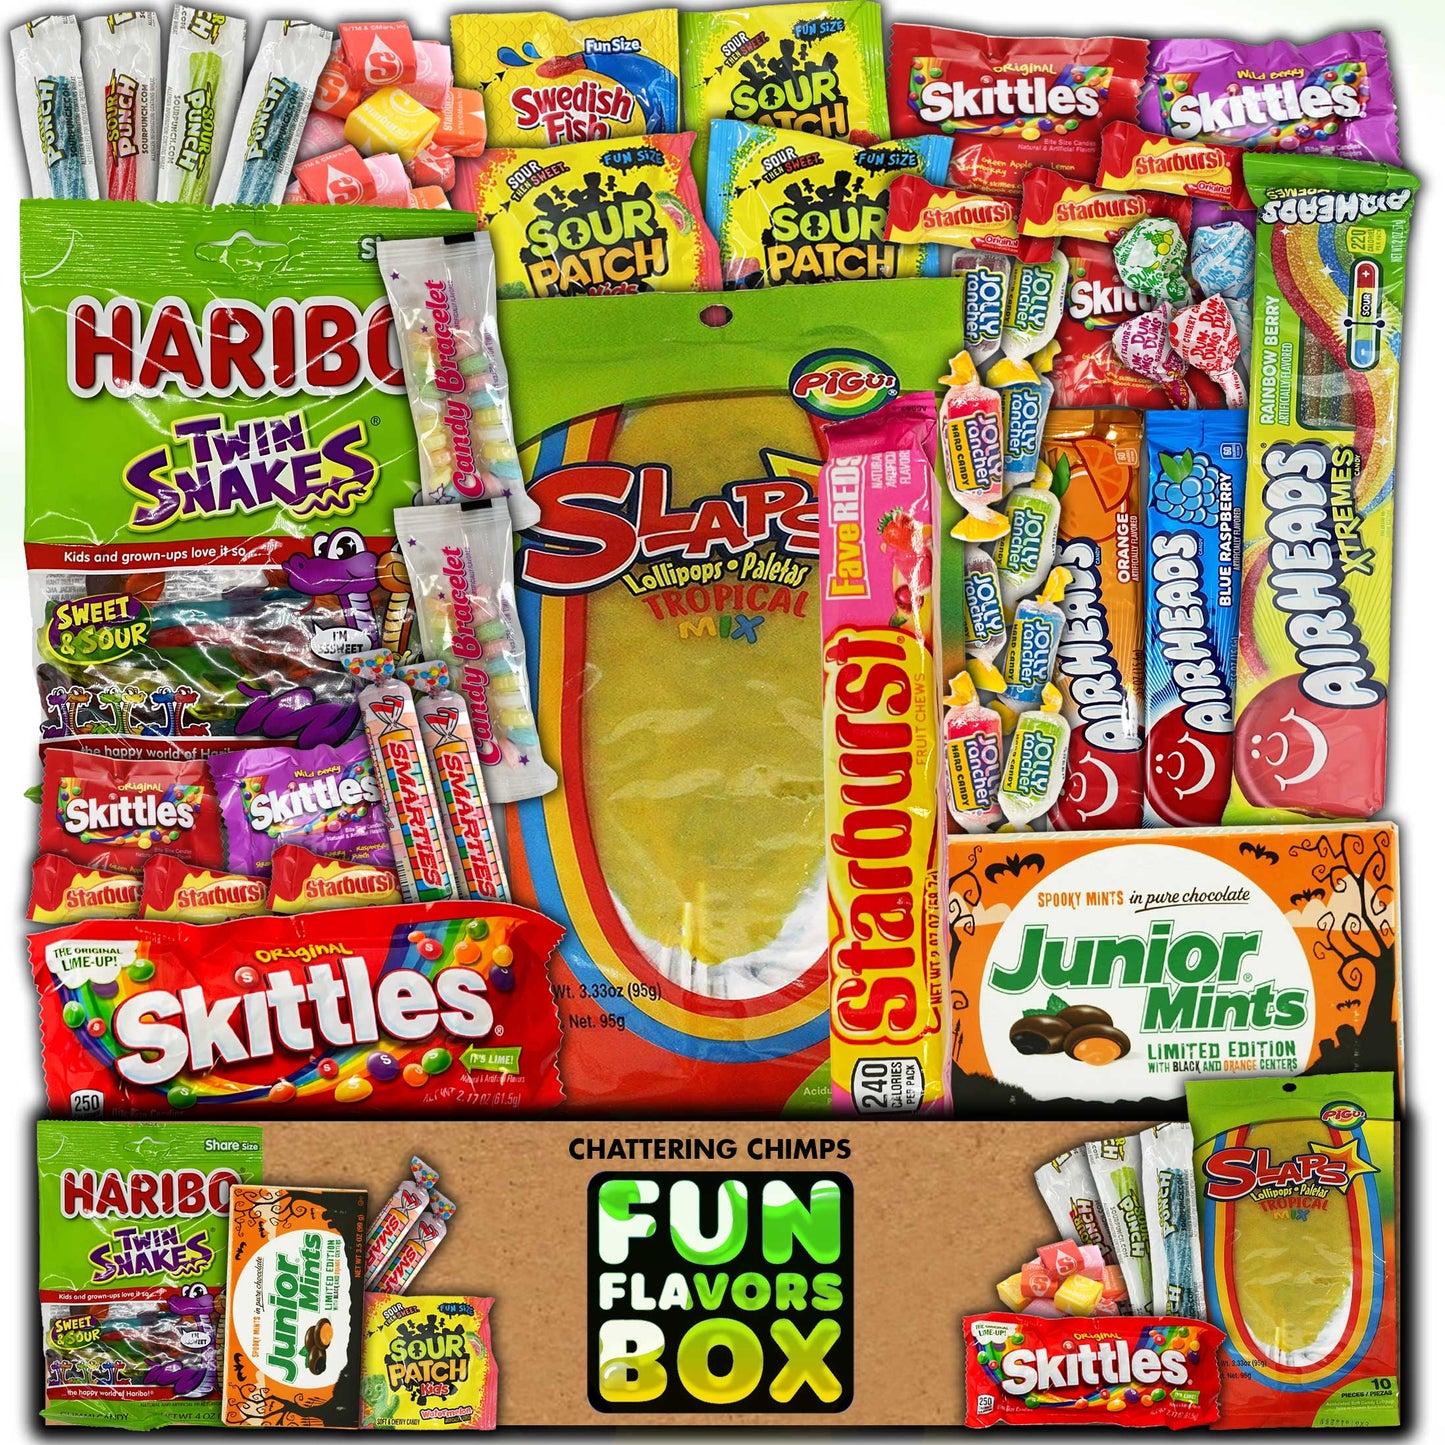 Fun Flavors Box variety pack skittles, airheads, sweet treats, Haribo, smarties, swedish fish 60 ct care package